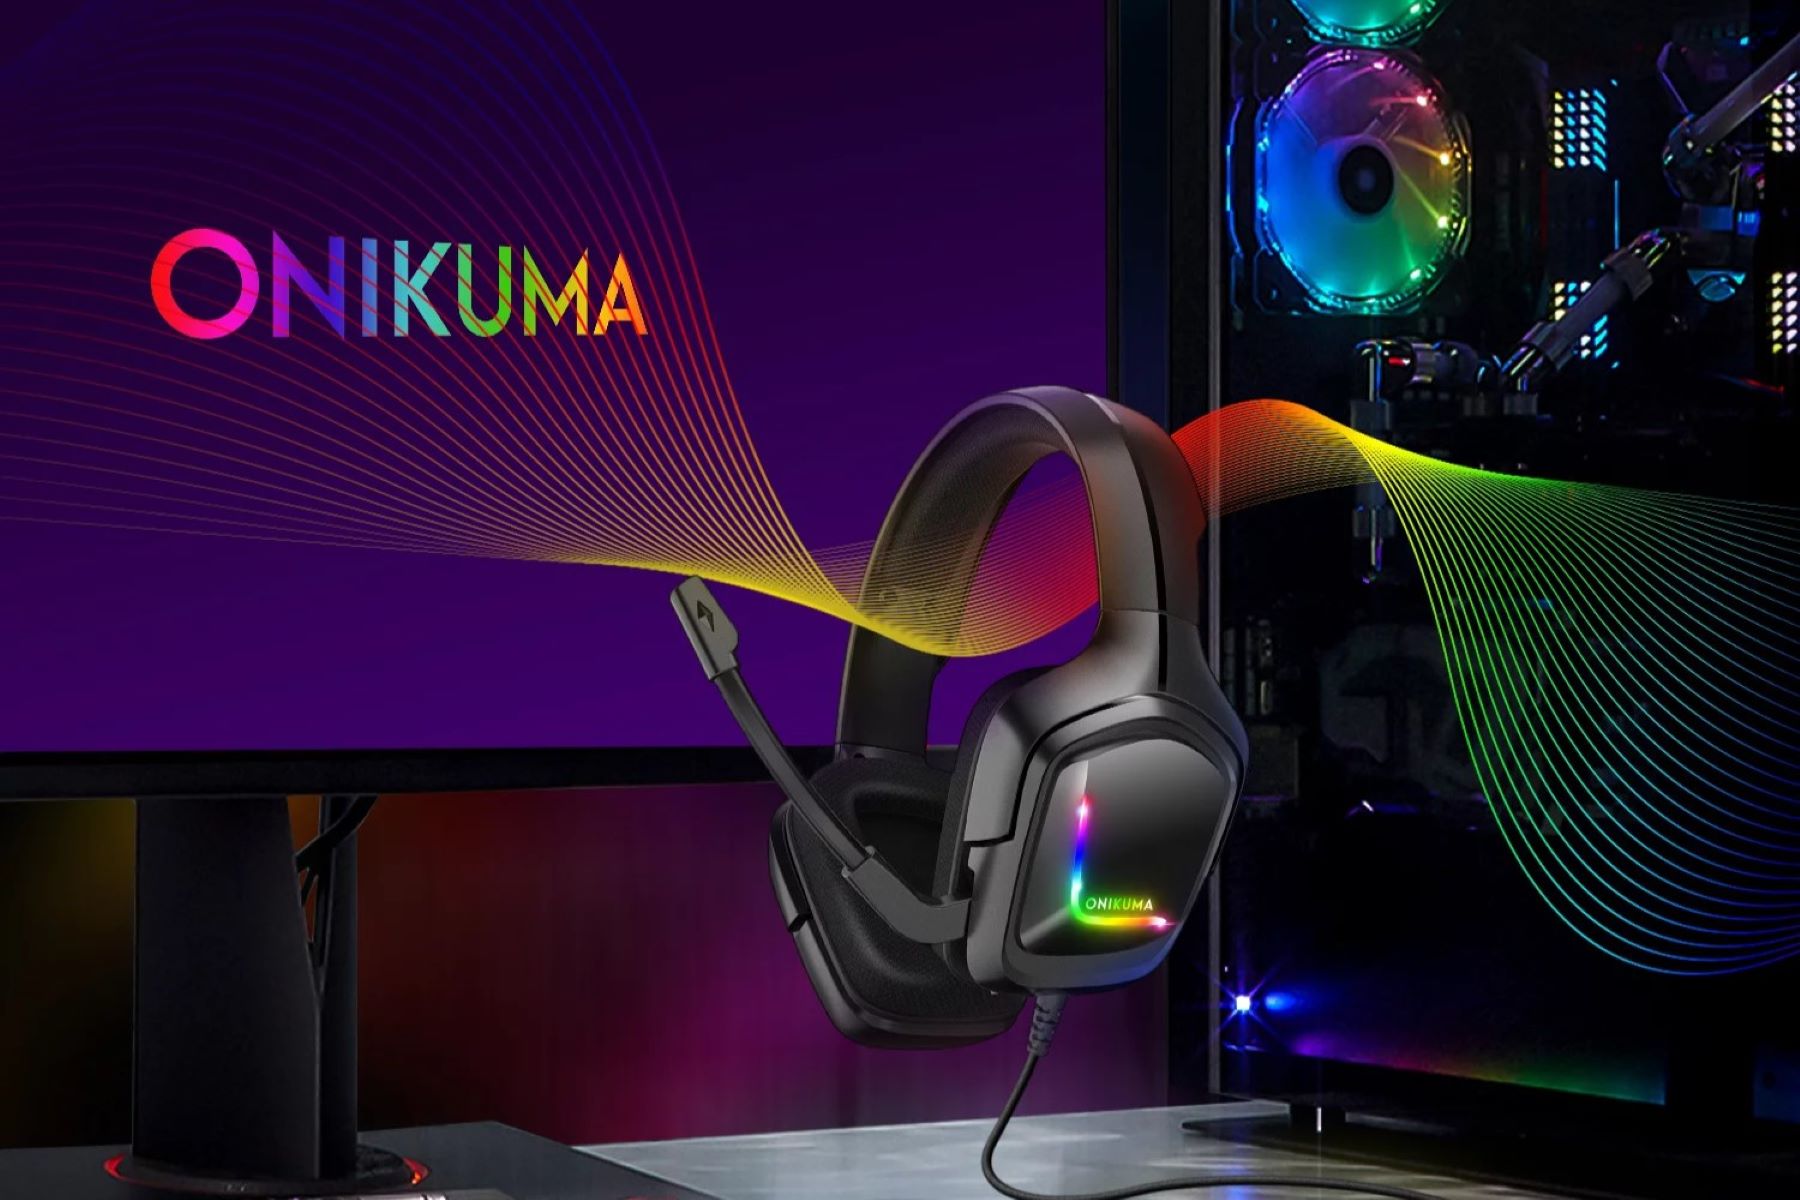 Installing Your Onikuma Gaming Headset: Instructions